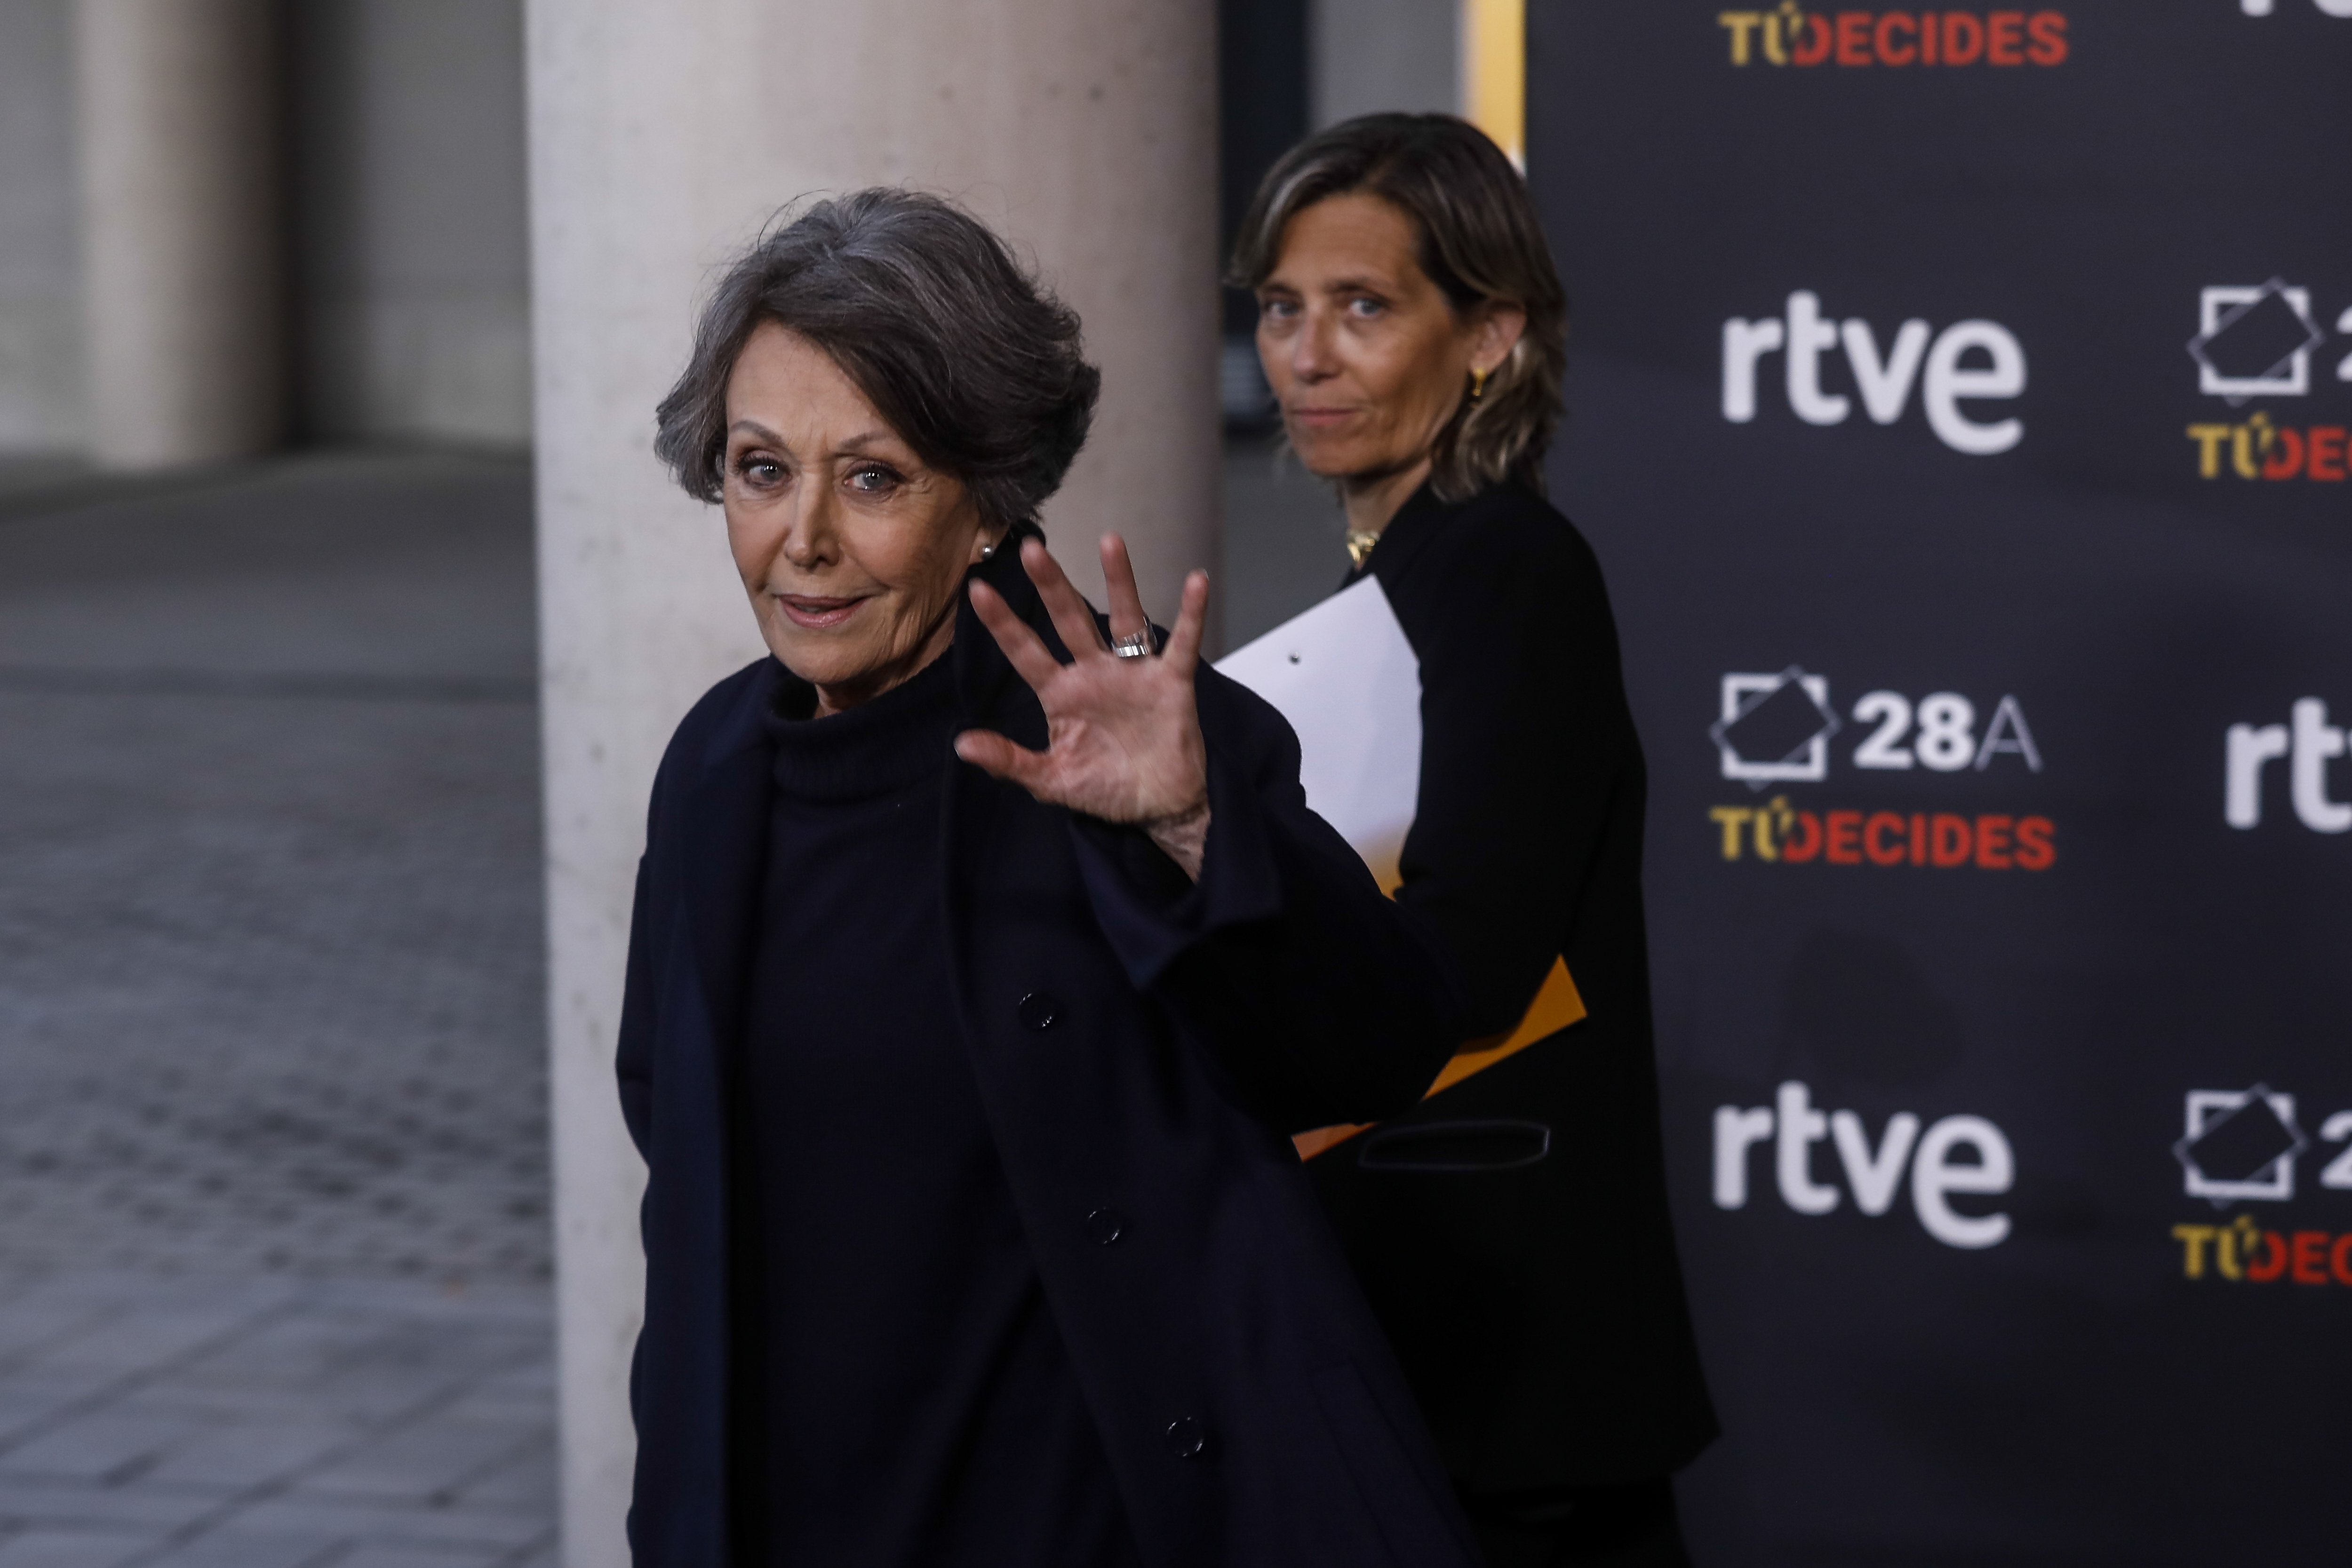 SORPRENDENTE FICHAJE Famosísimo presentador catalán, ex de TV3, firma por TVE